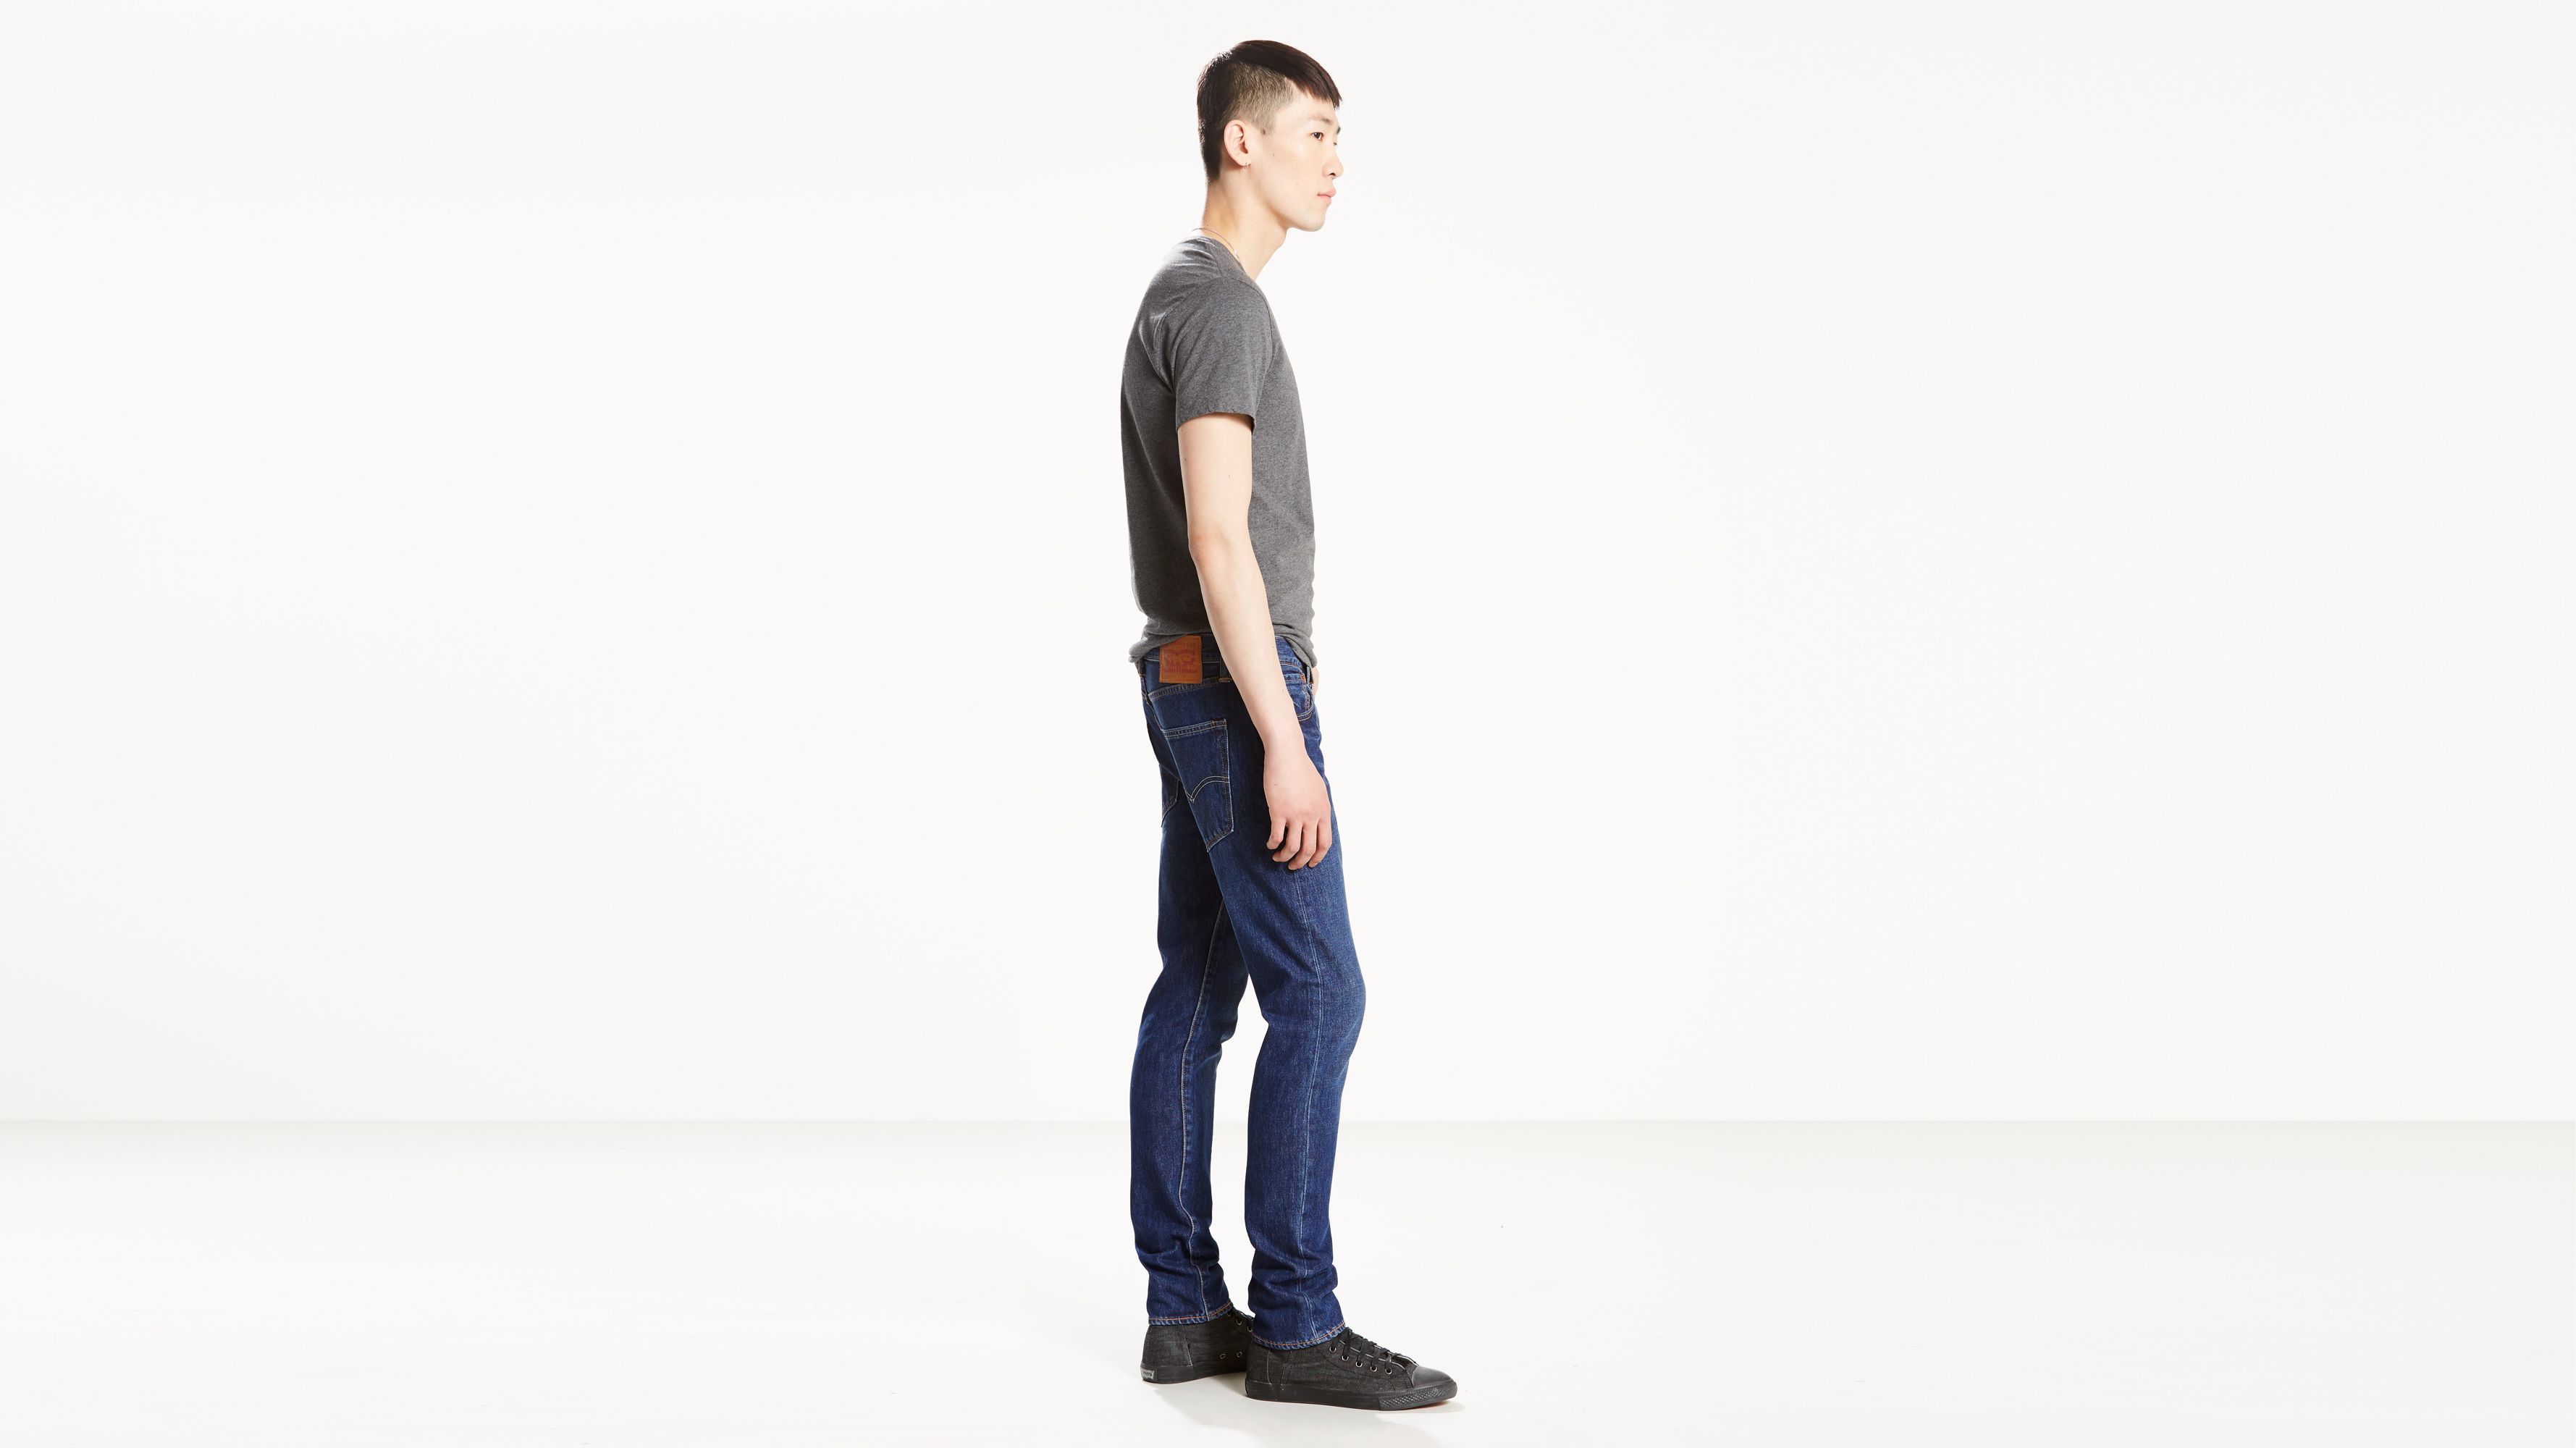 levi's mens 501 skinny jeans noten